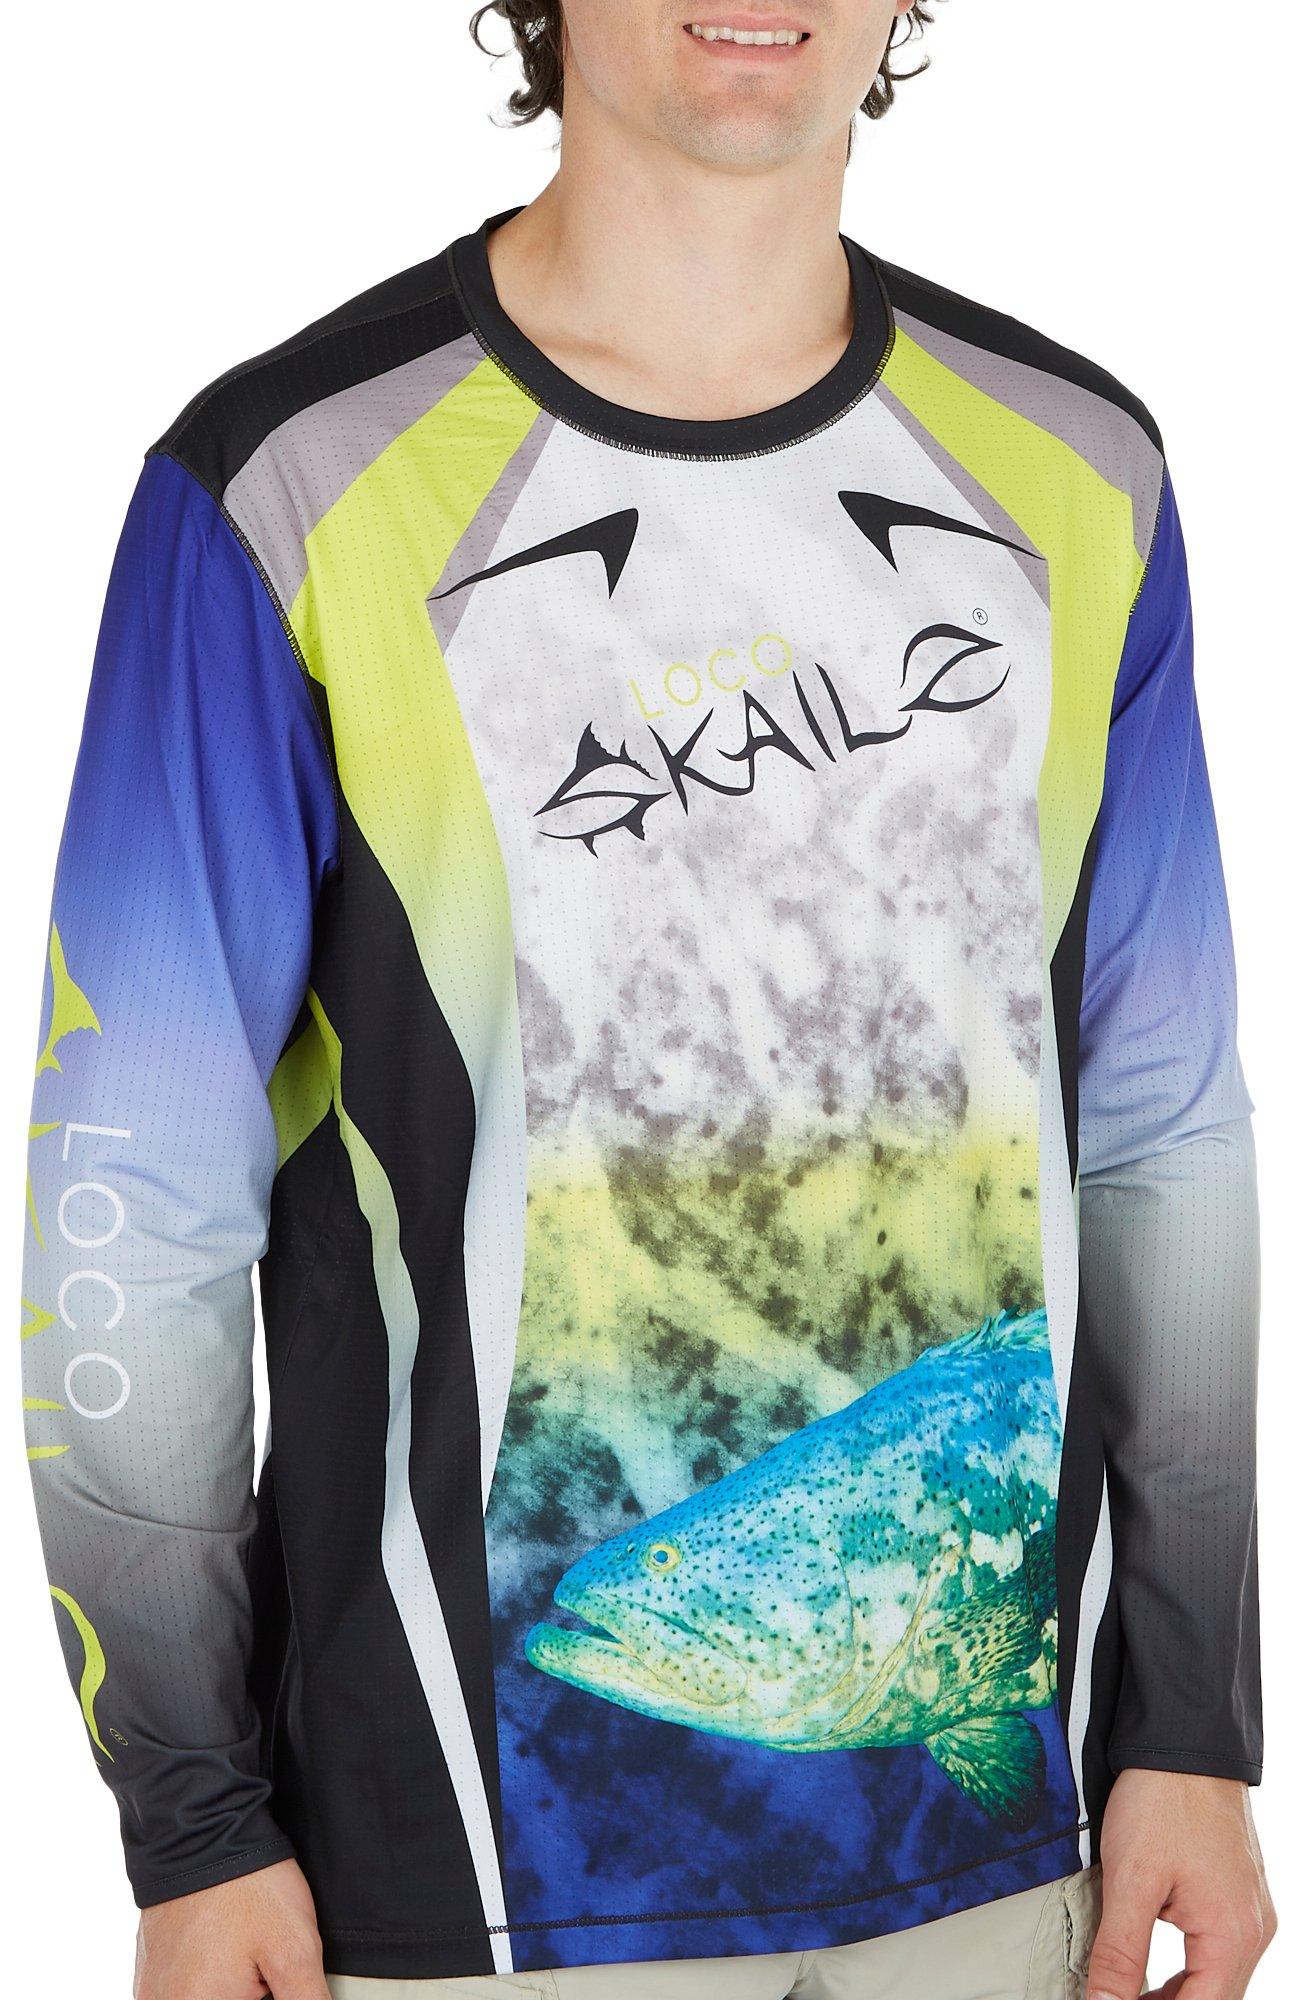 Loco Skailz Mens Vented Fish Long Sleeve Performance Shirt - Multi - X-Large